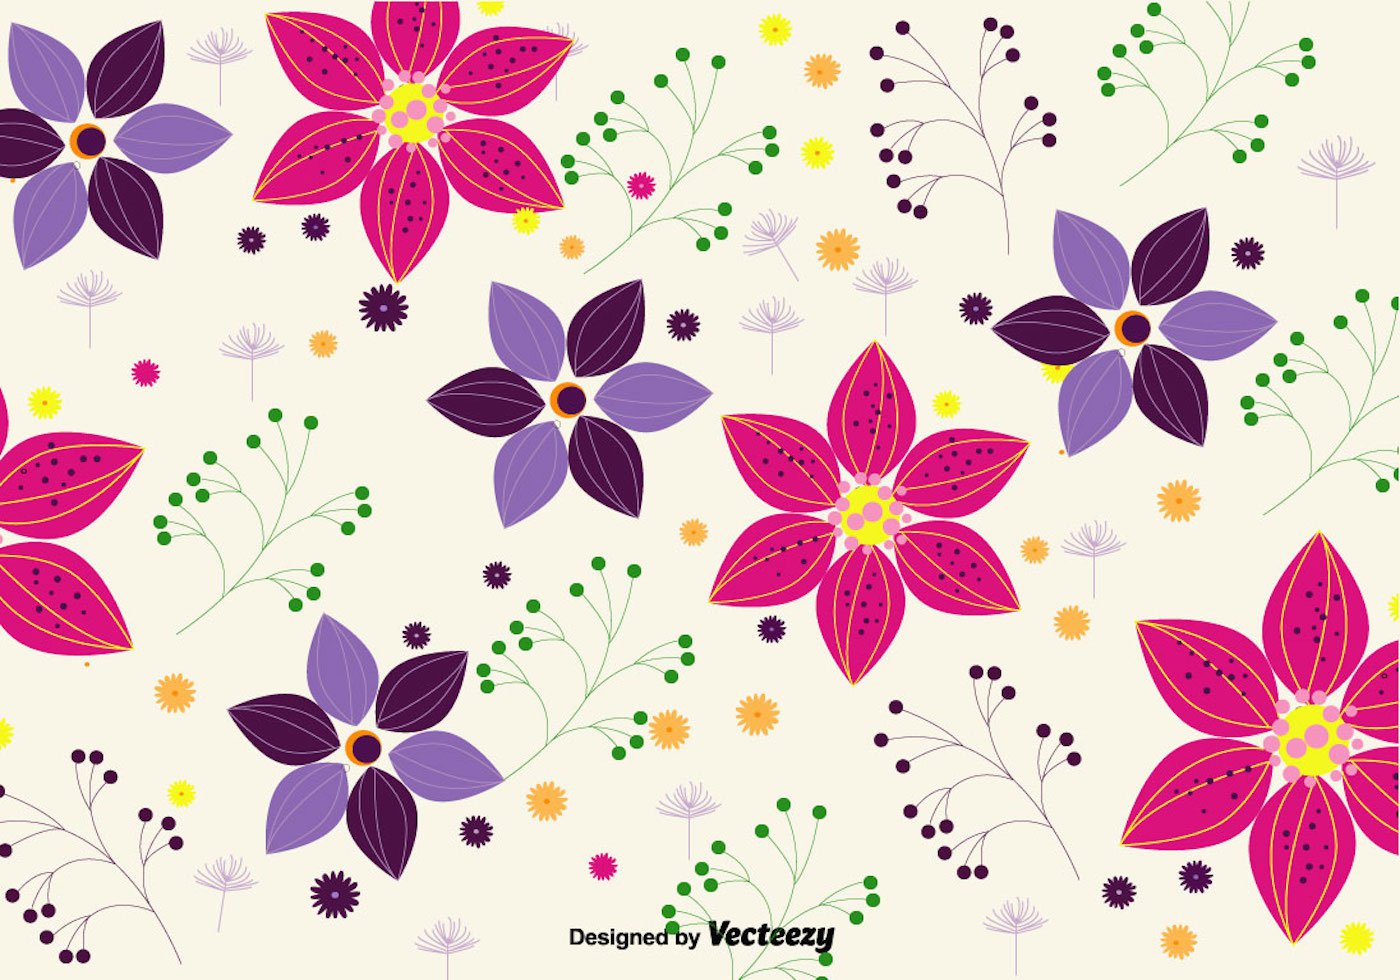 Green Flower Background Free Vector Art - 14716 Free Downloads